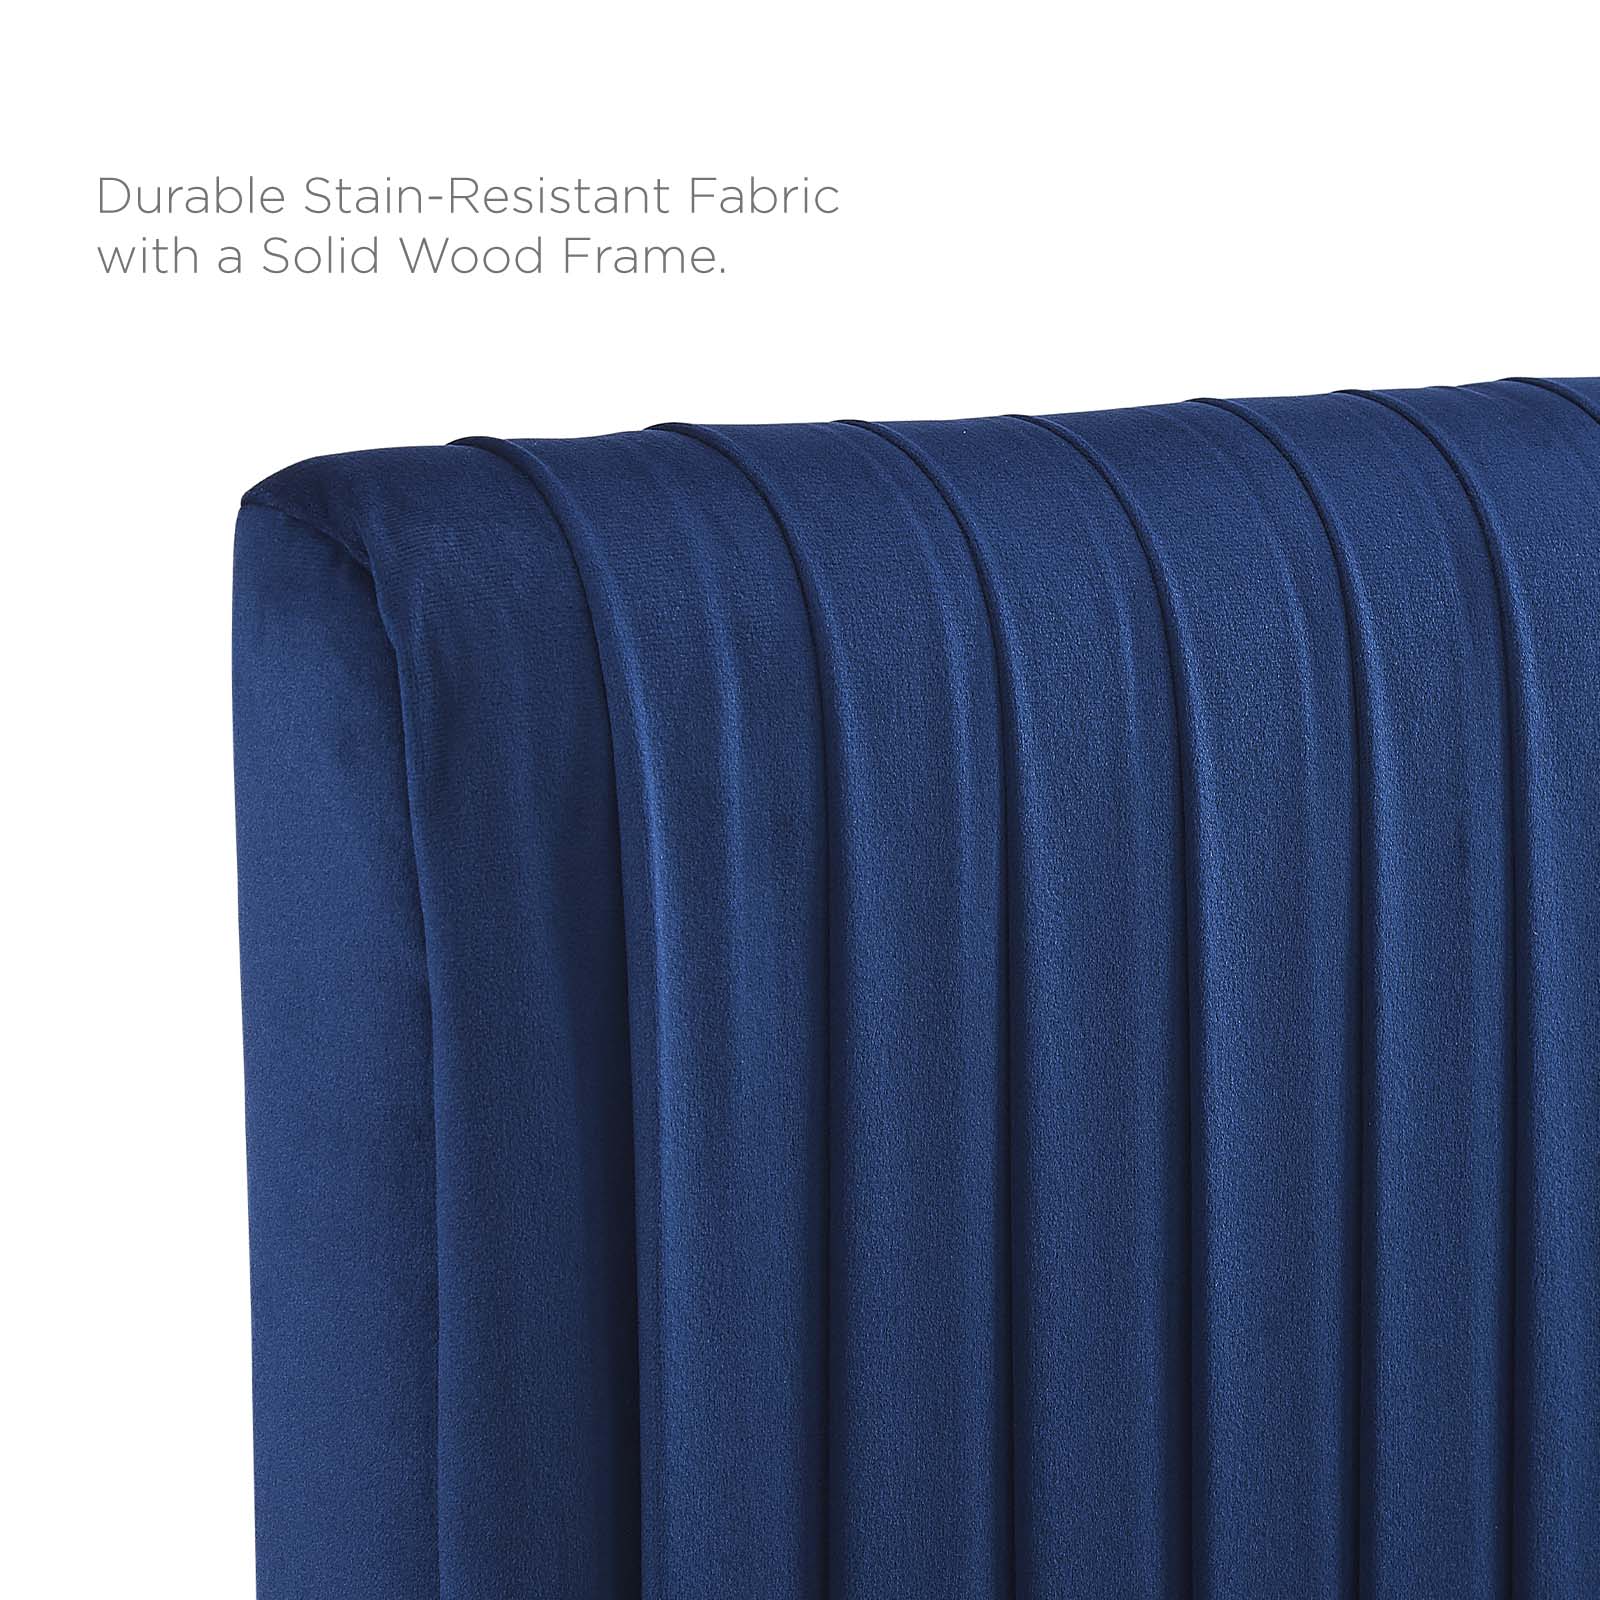 Peyton Performance Velvet Platform Bed with Wood Legs and Metal Sleeves - East Shore Modern Home Furnishings